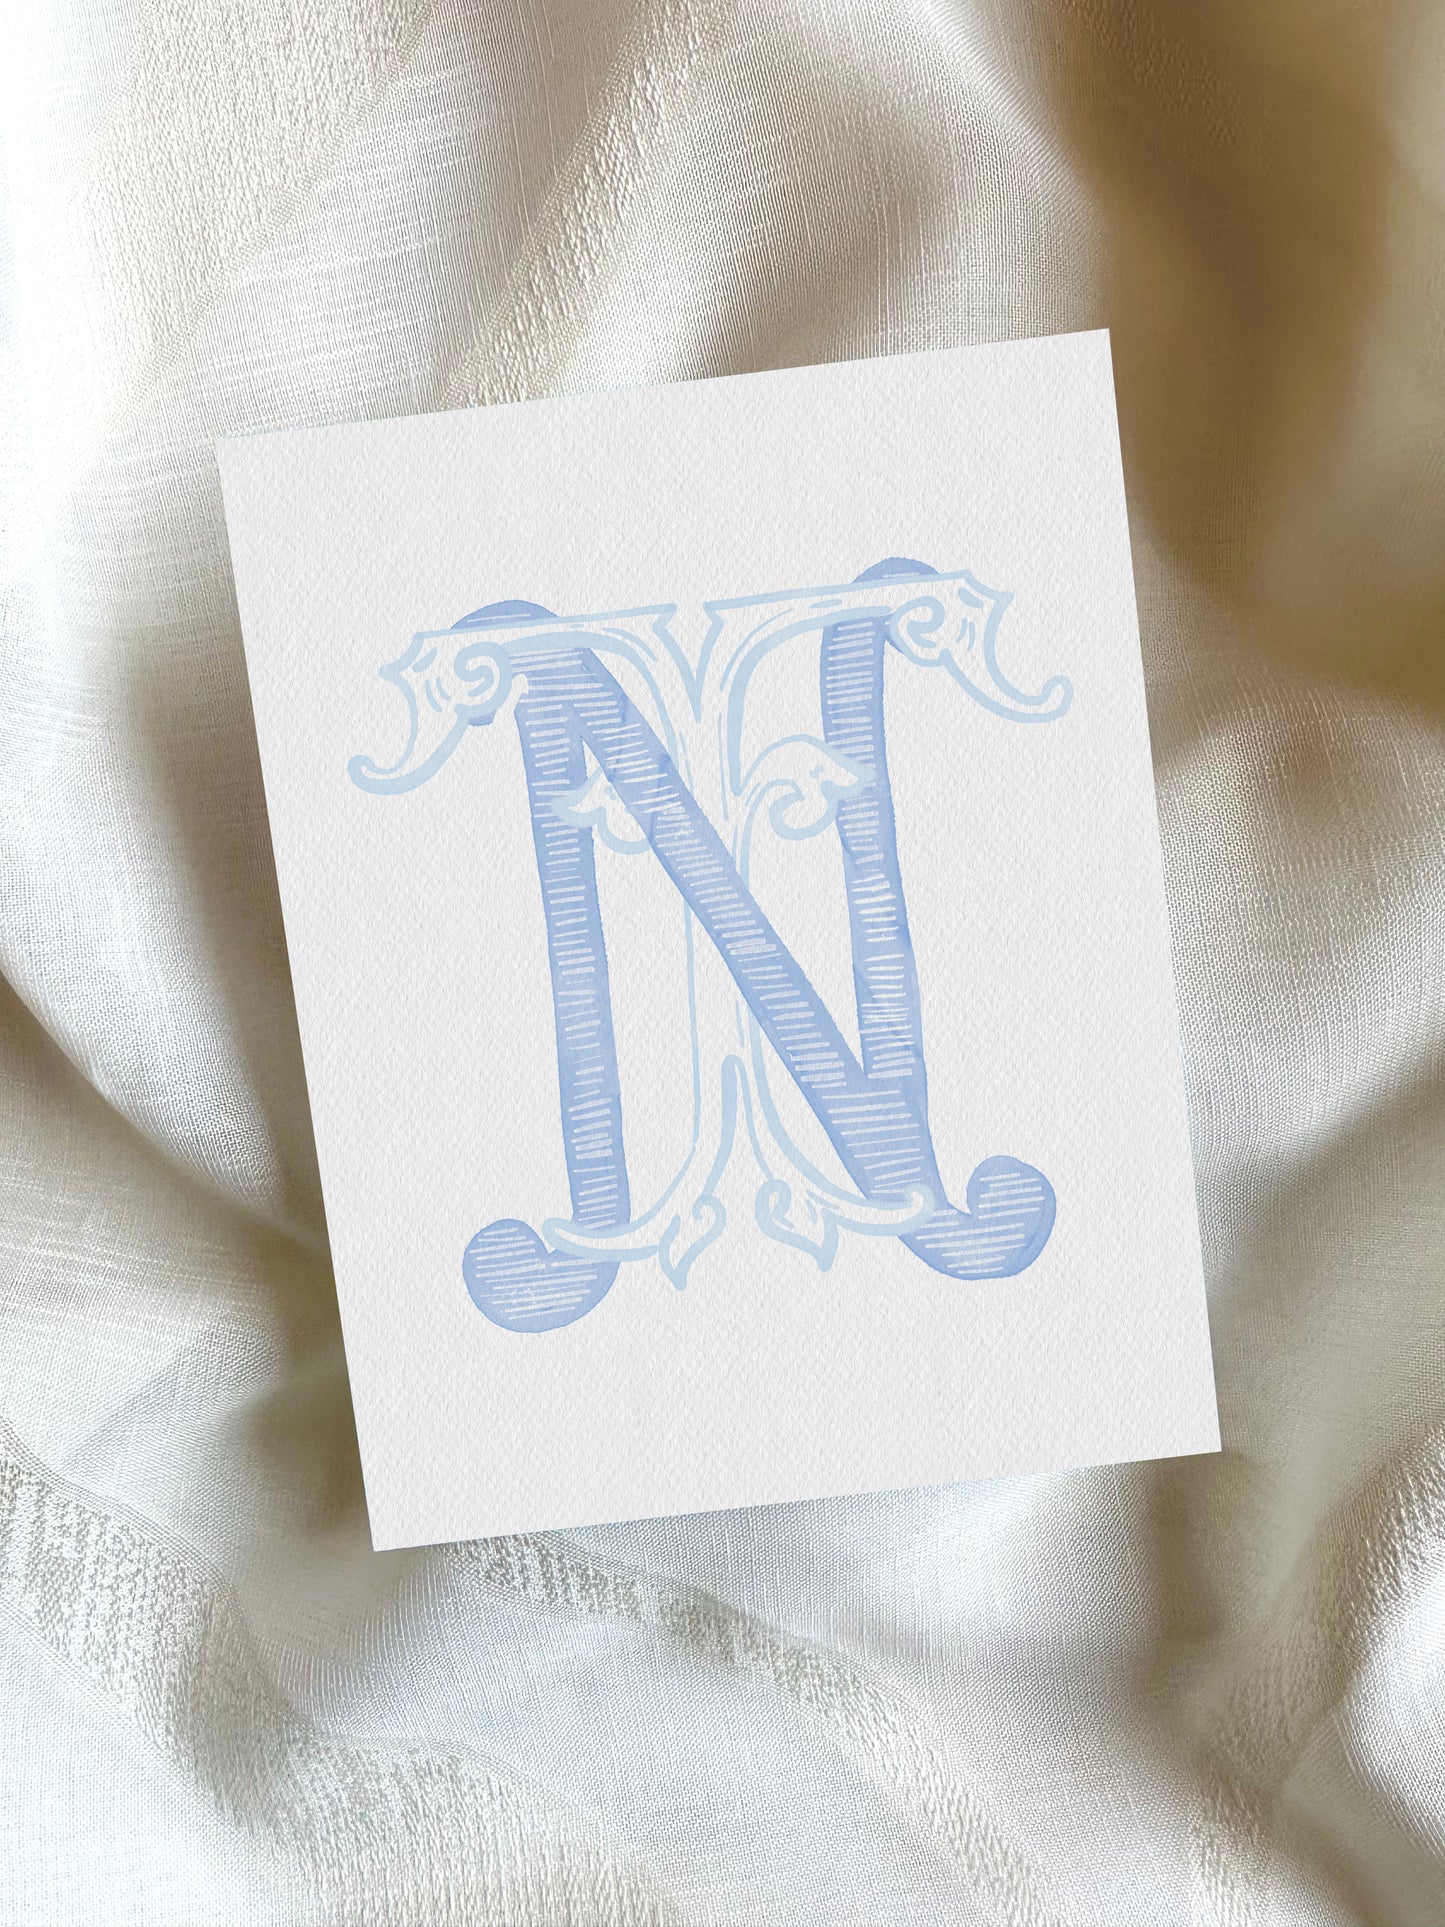 2 Letter Monogram with Letters NT TN | Digital Download - Wedding Monogram SVG, Personal Logo, Wedding Logo for Wedding Invitations The Wedding Crest Lab